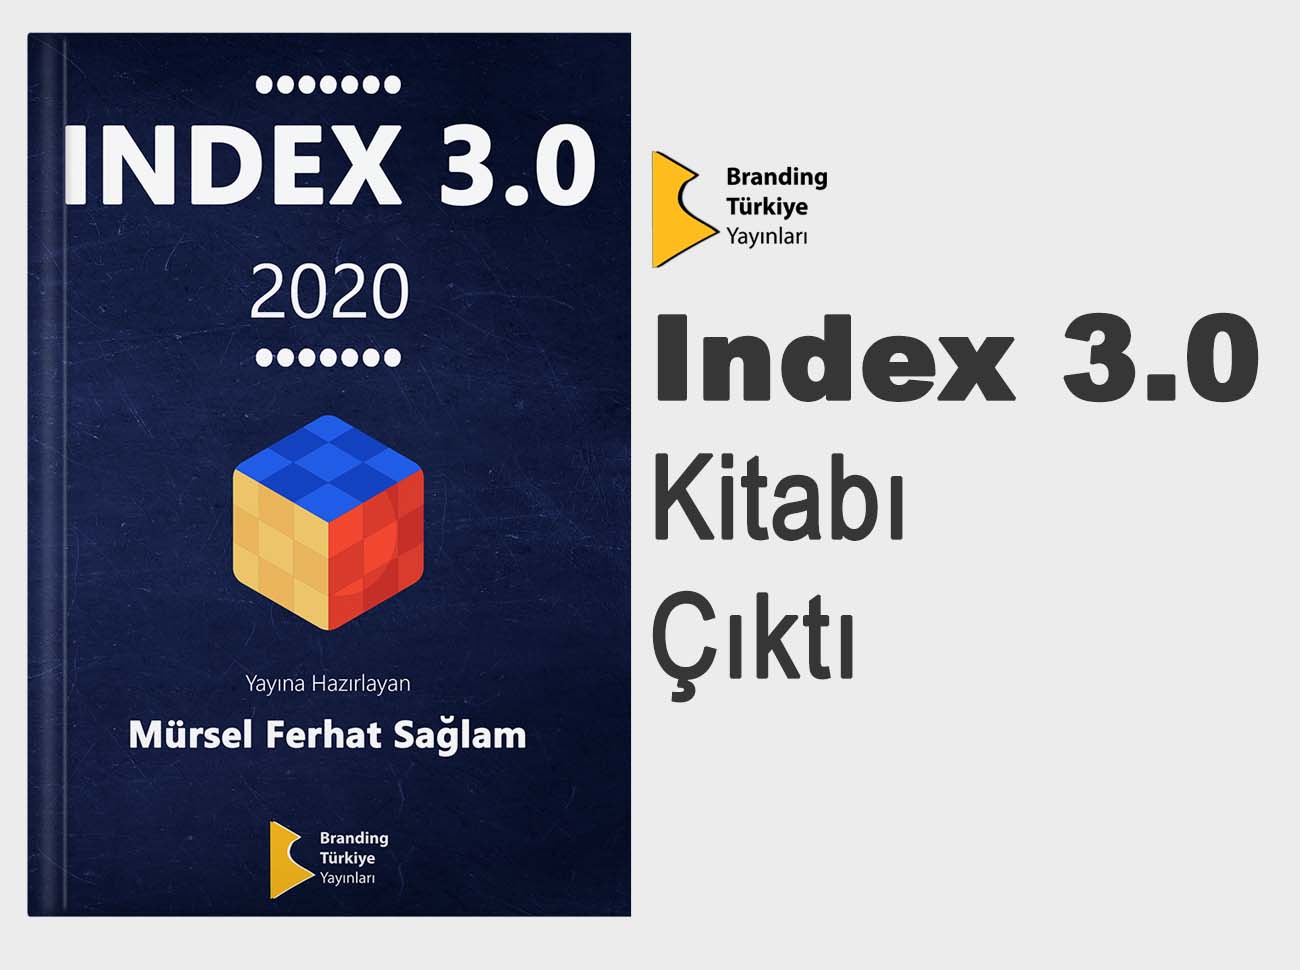 Index 3.0 Kitabı Çıktı